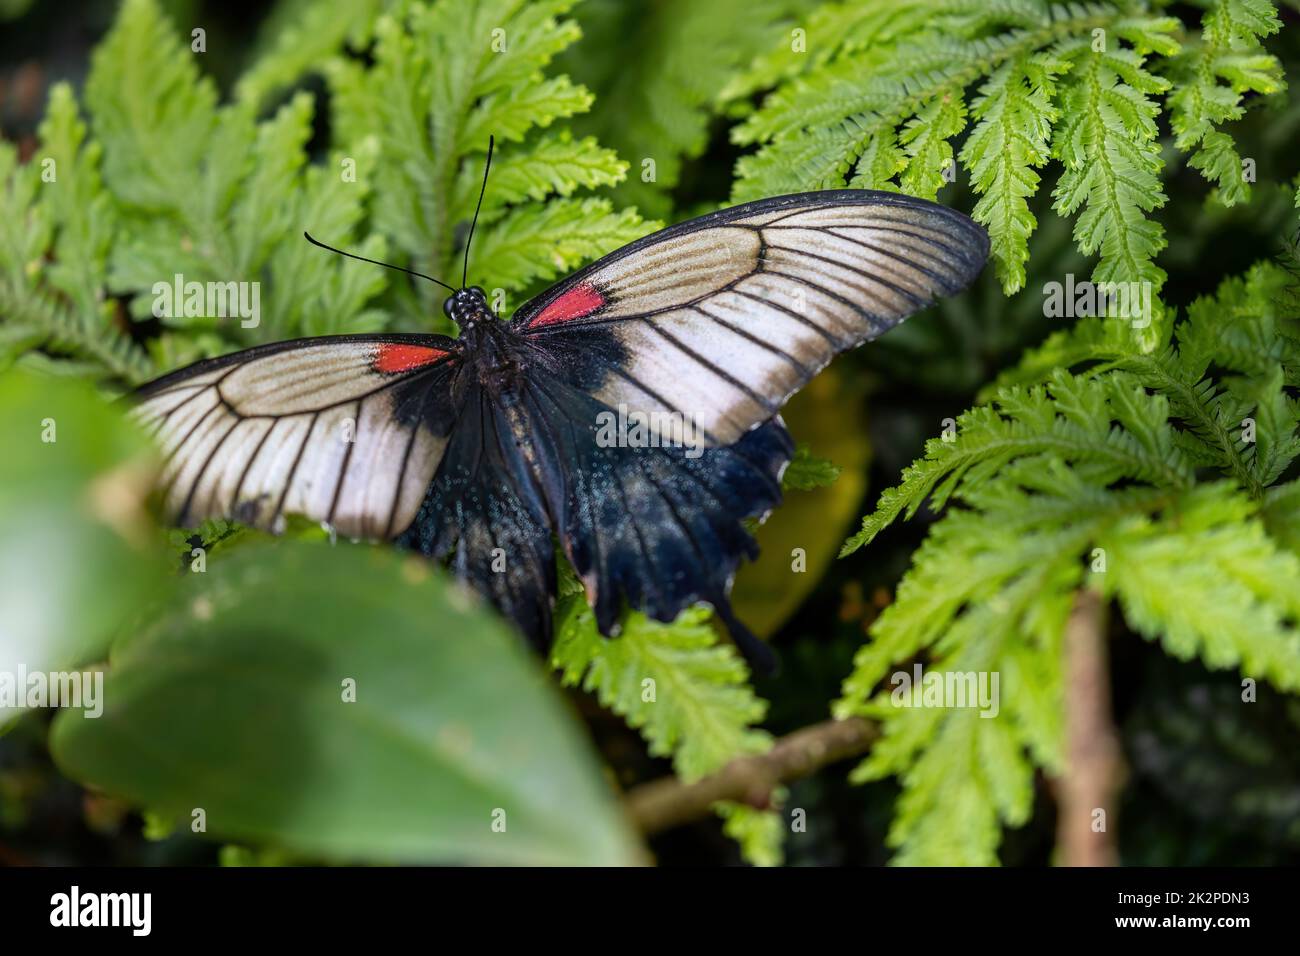 Gran mariposa mormona del sudeste asiático. Foto de stock